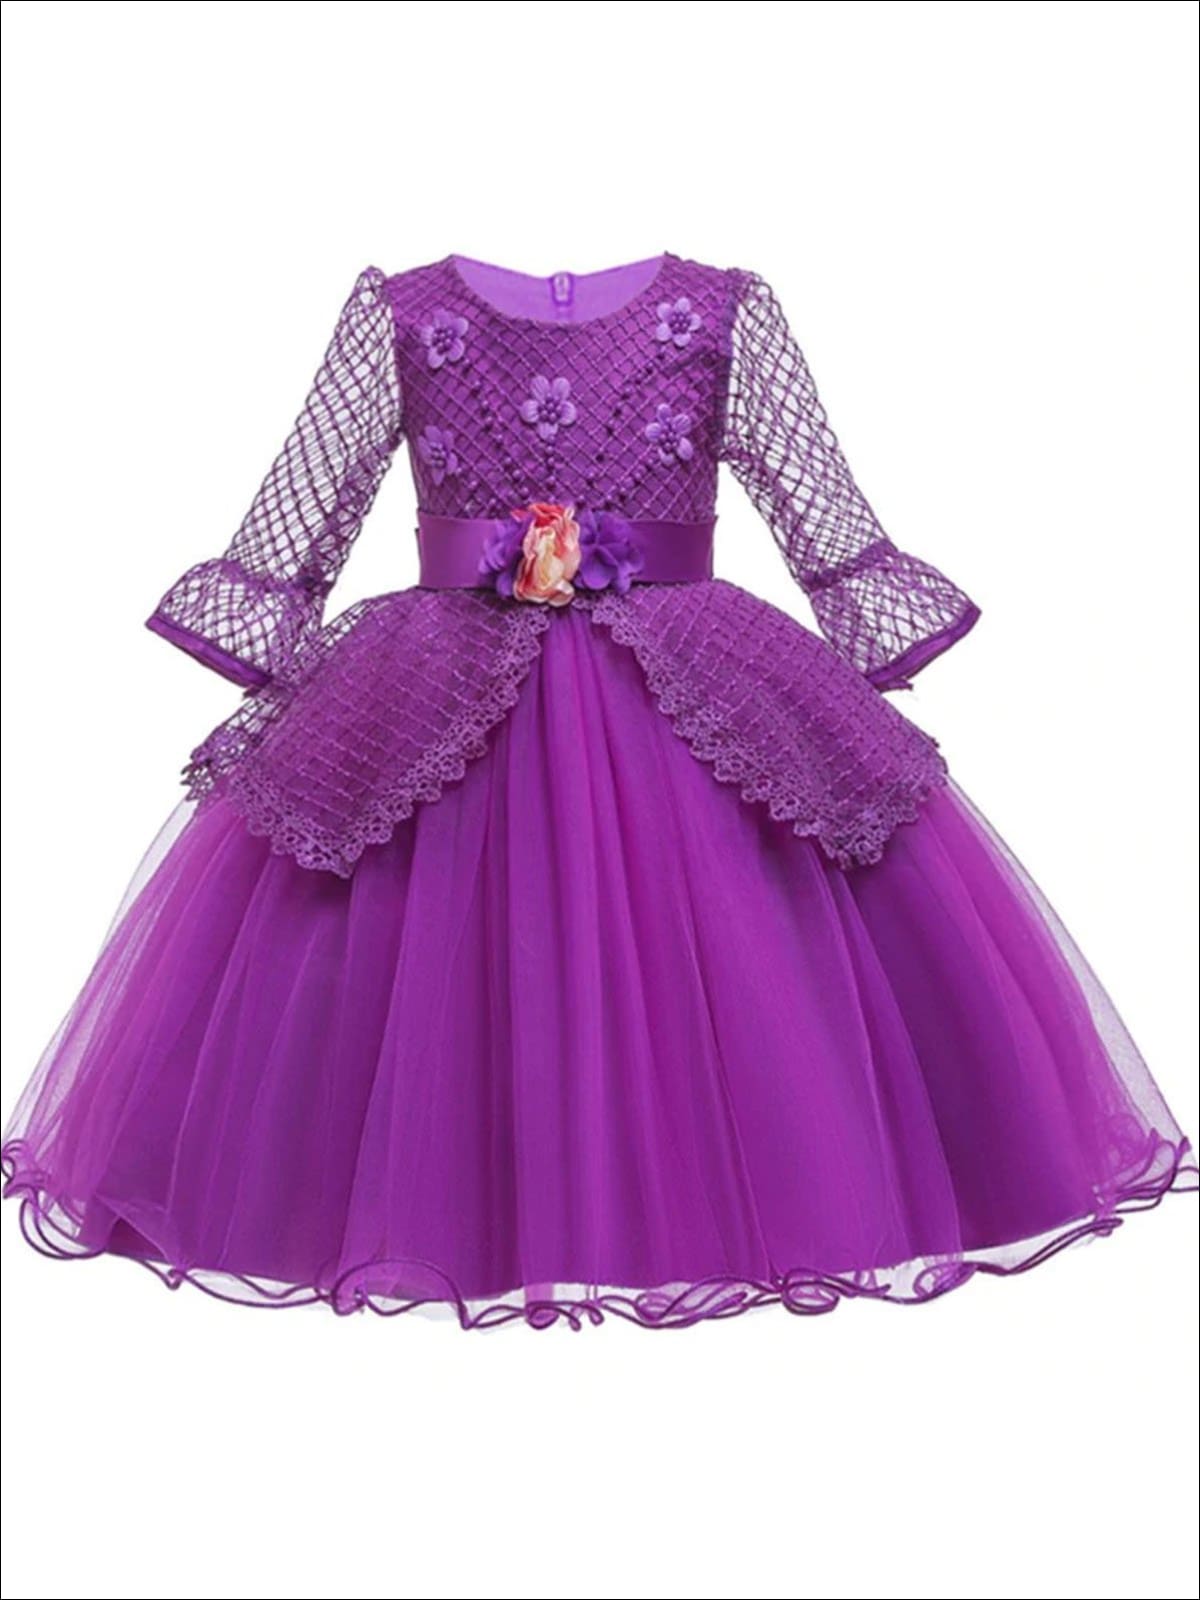 Girls Long Sleeve Lace Princess Holiday Dress With Flower Sash - Purple / 3T - Girls Fall Dressy Dress